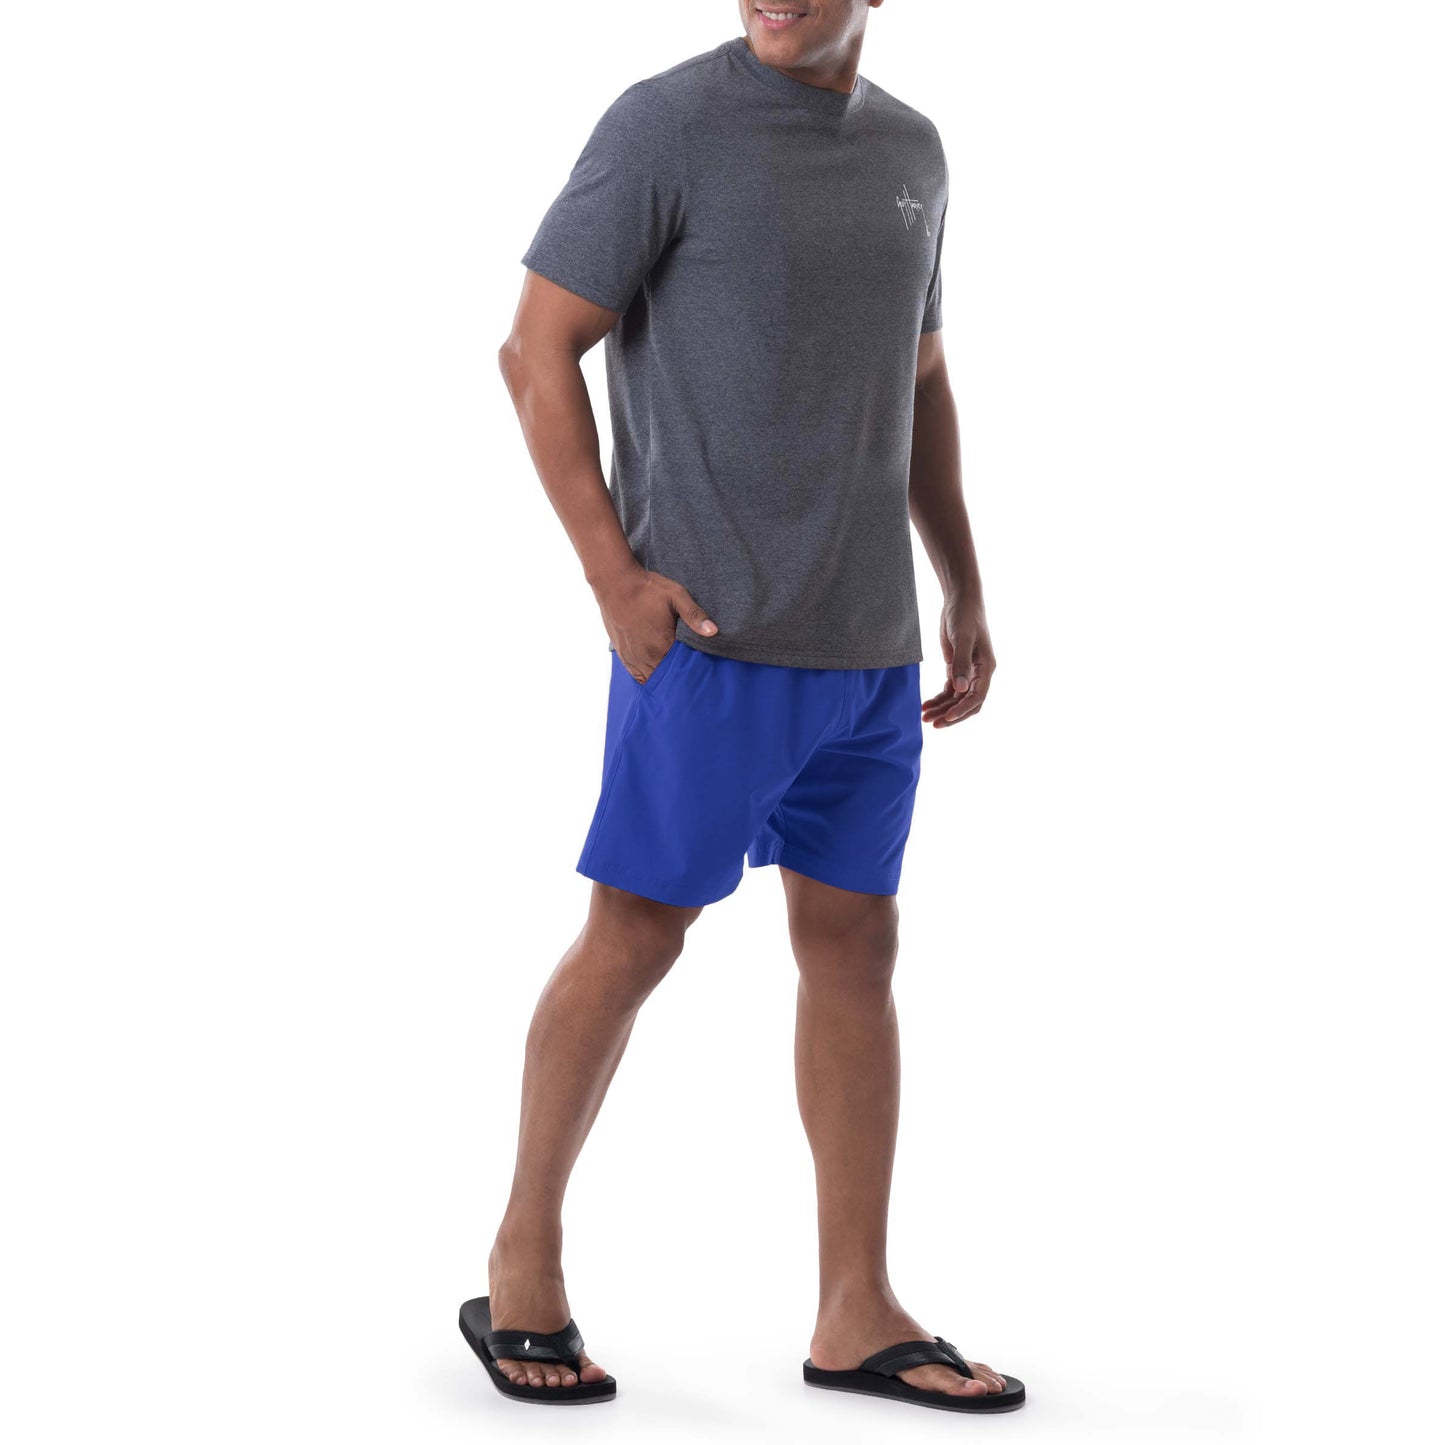 Men's EA Blue Marlin Threadcycled Short Sleeve T-Shirt